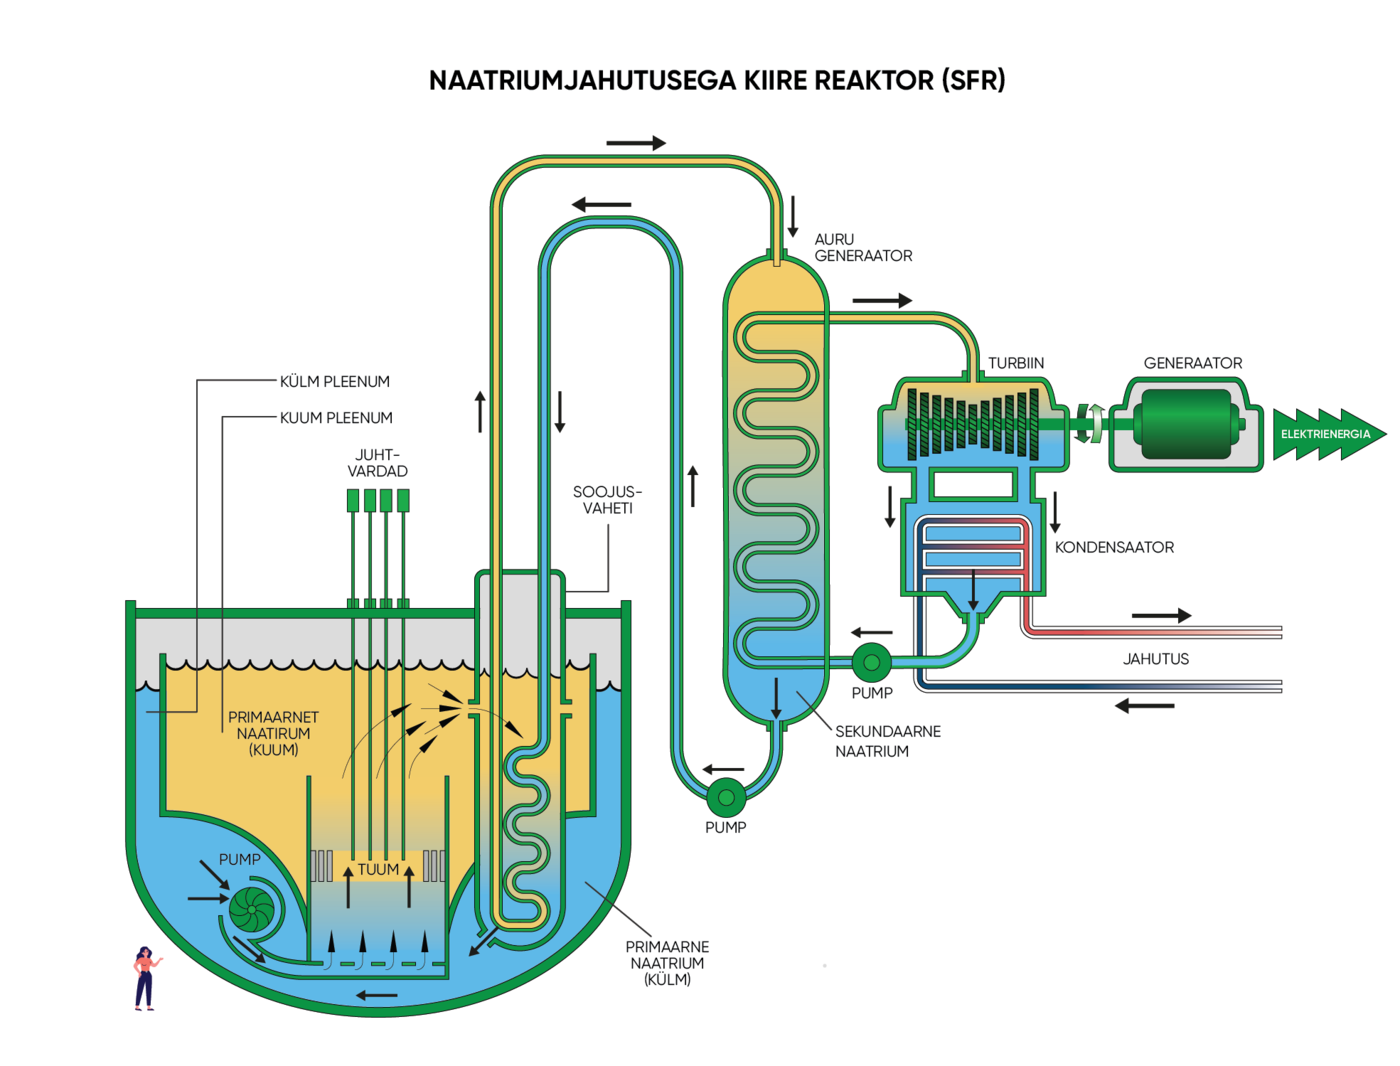 Naatriumjahutusega kiirete neutronitega reaktor